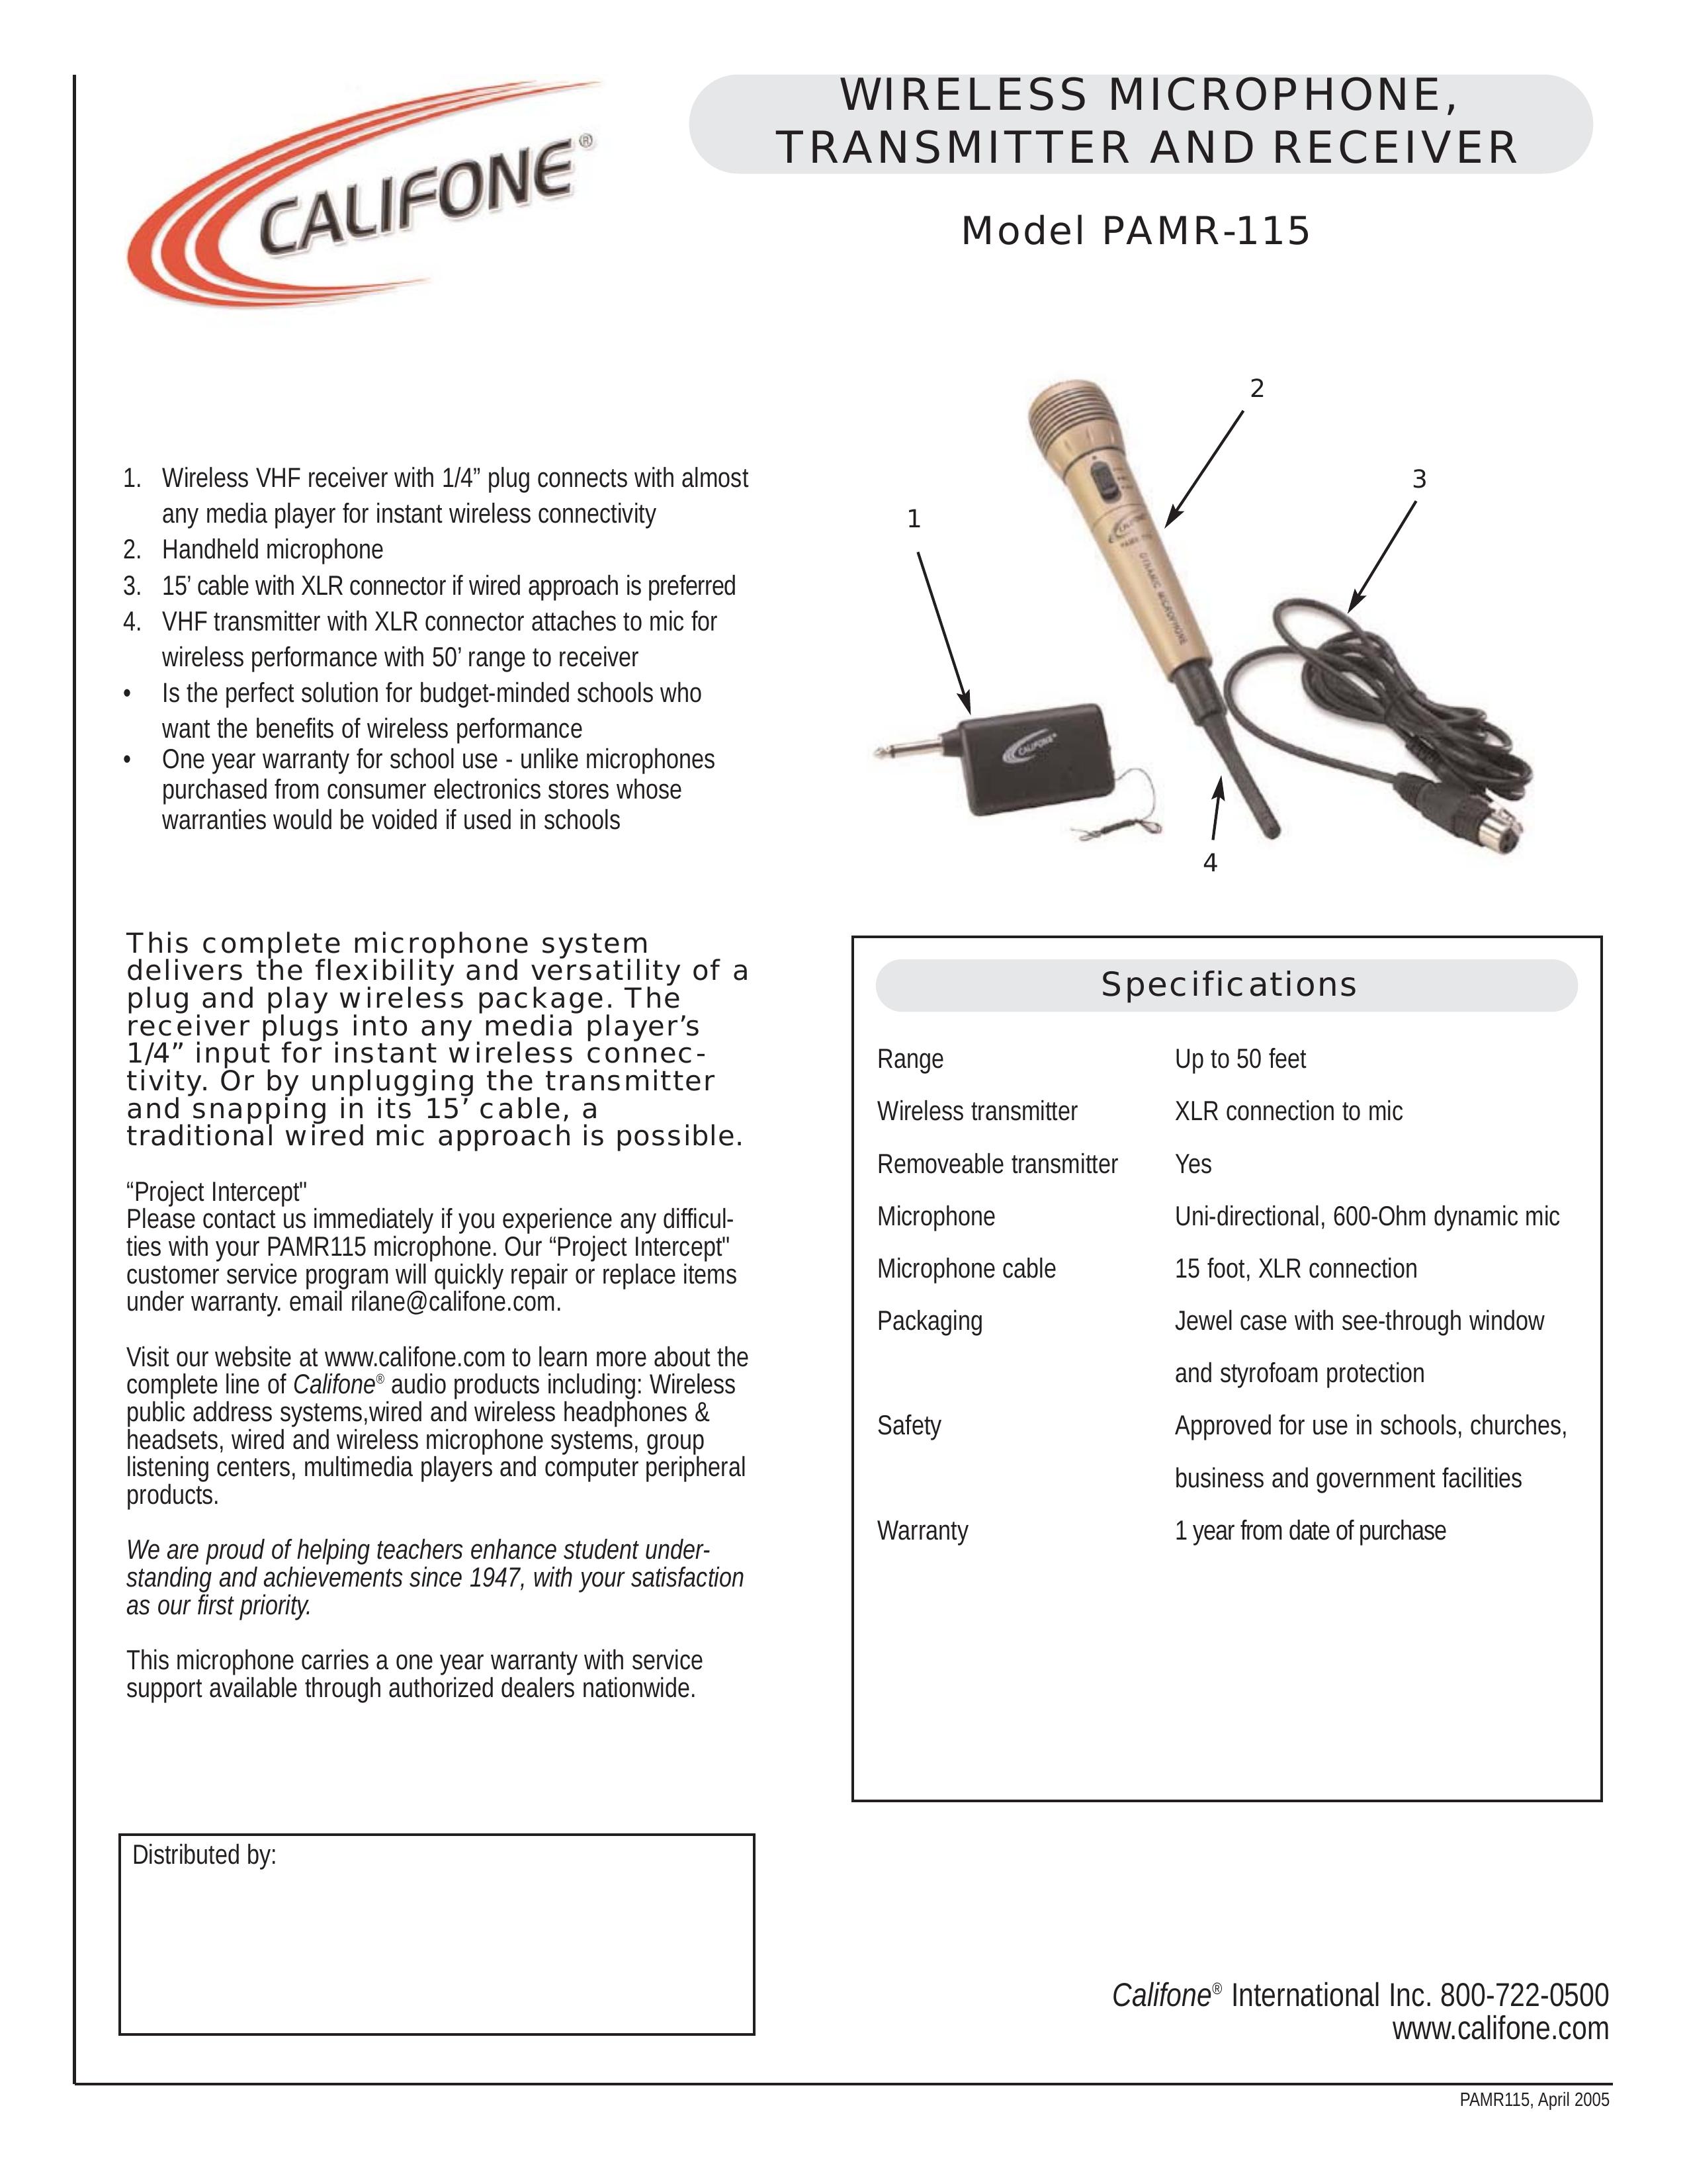 Califone PAMR-115 Microphone User Manual